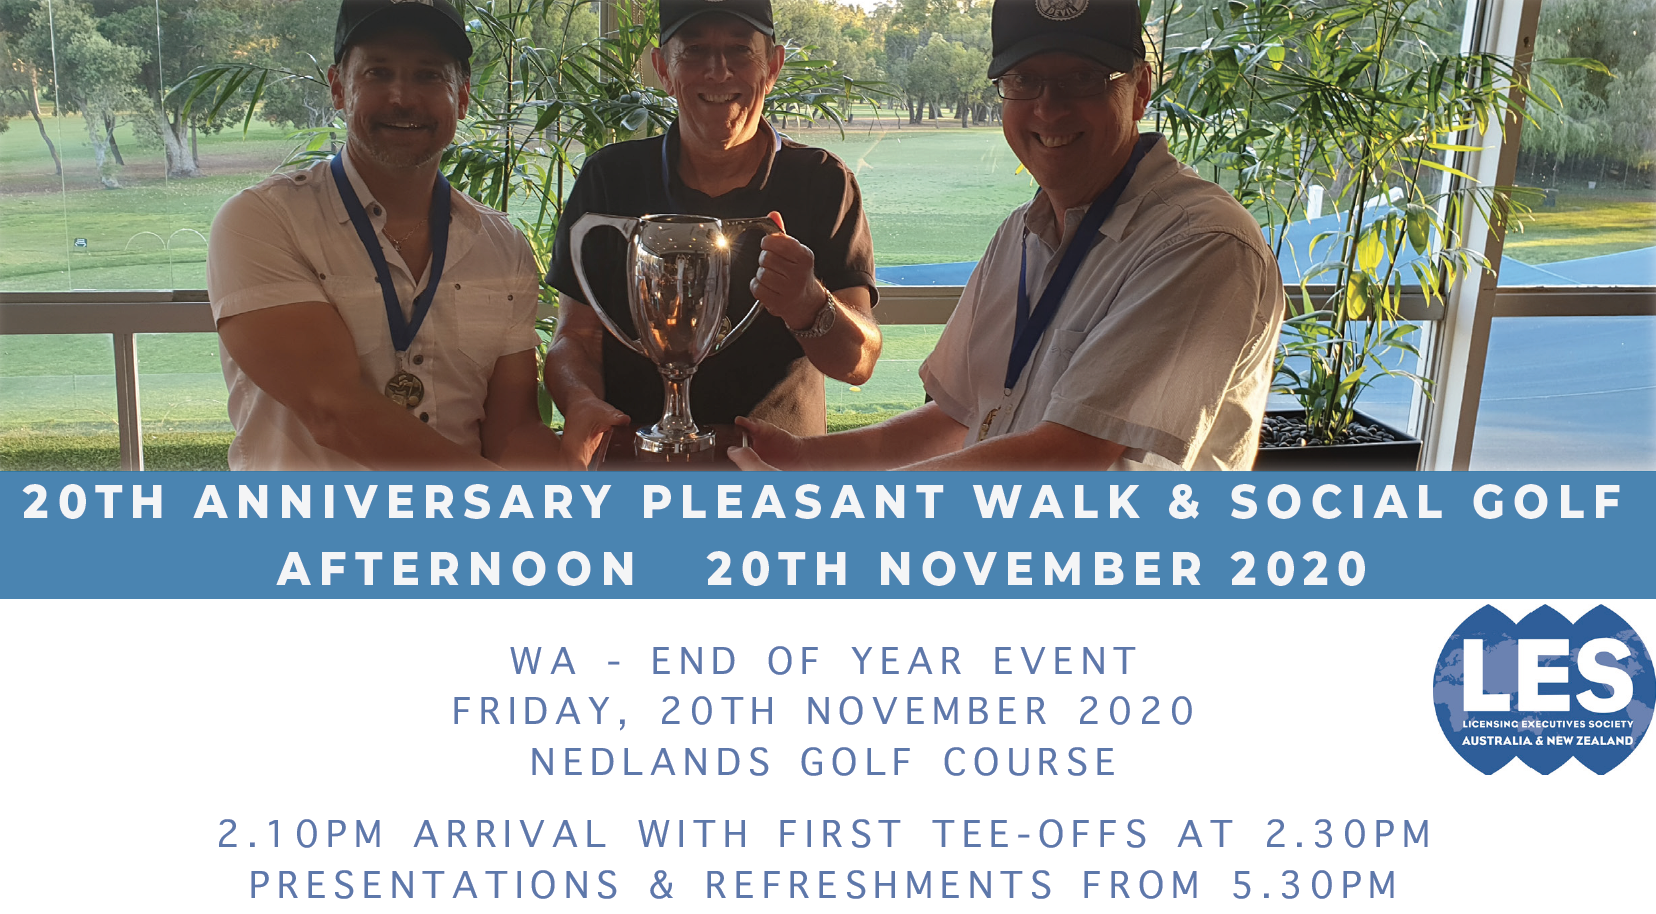 20th Anniversary Pleasant Walk & Social Golf Afternoon